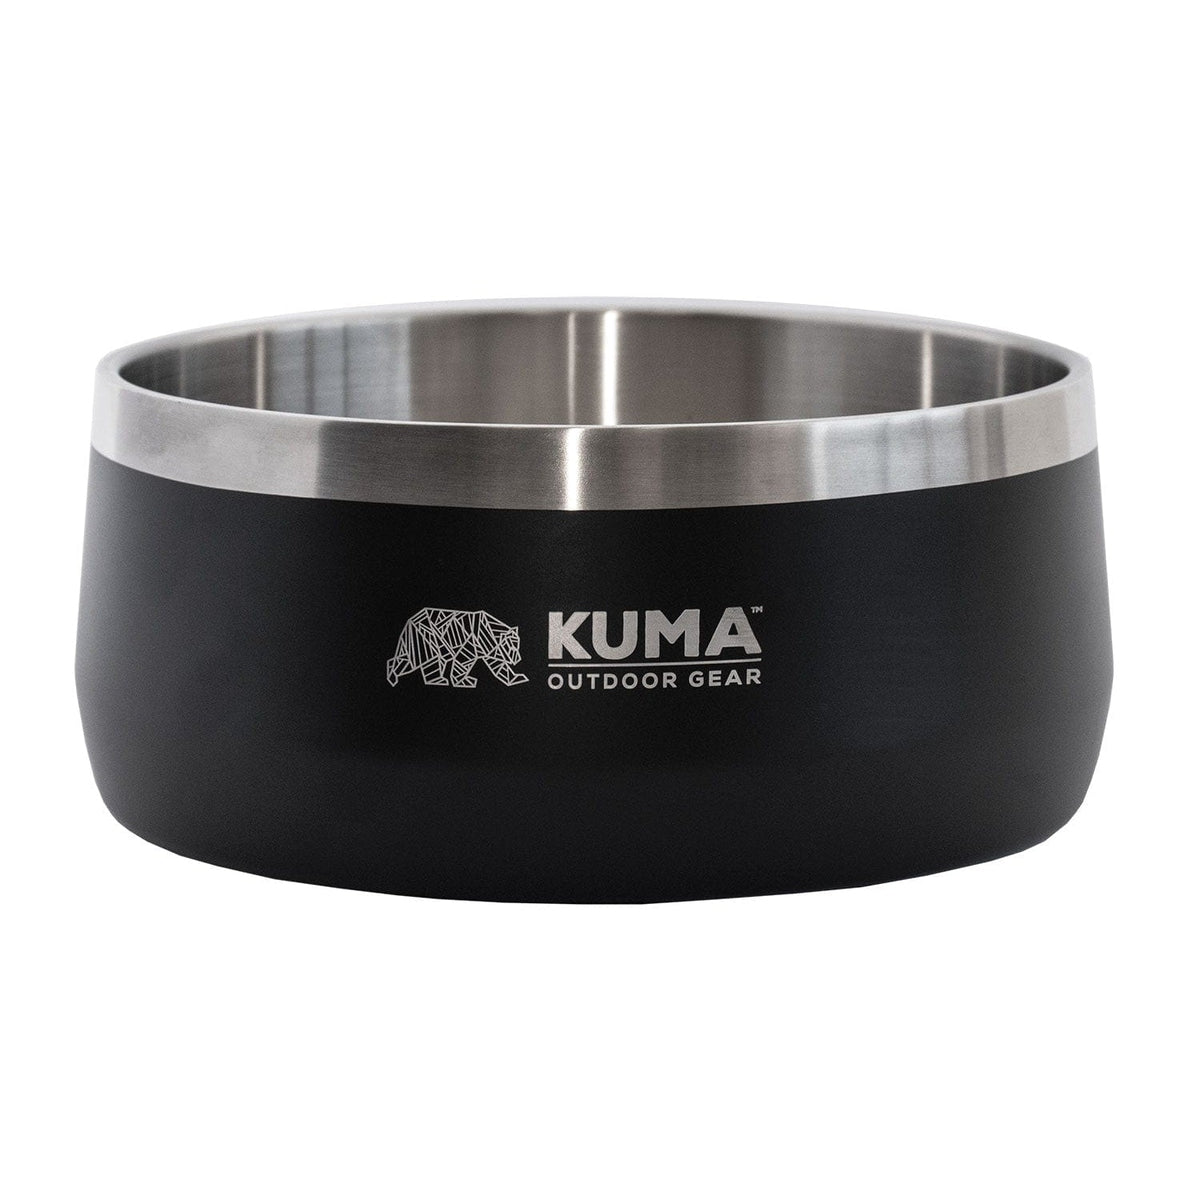 Kuma Outdoor Gear Dog Bowl Stainless Steel #KM-SSDB-BB